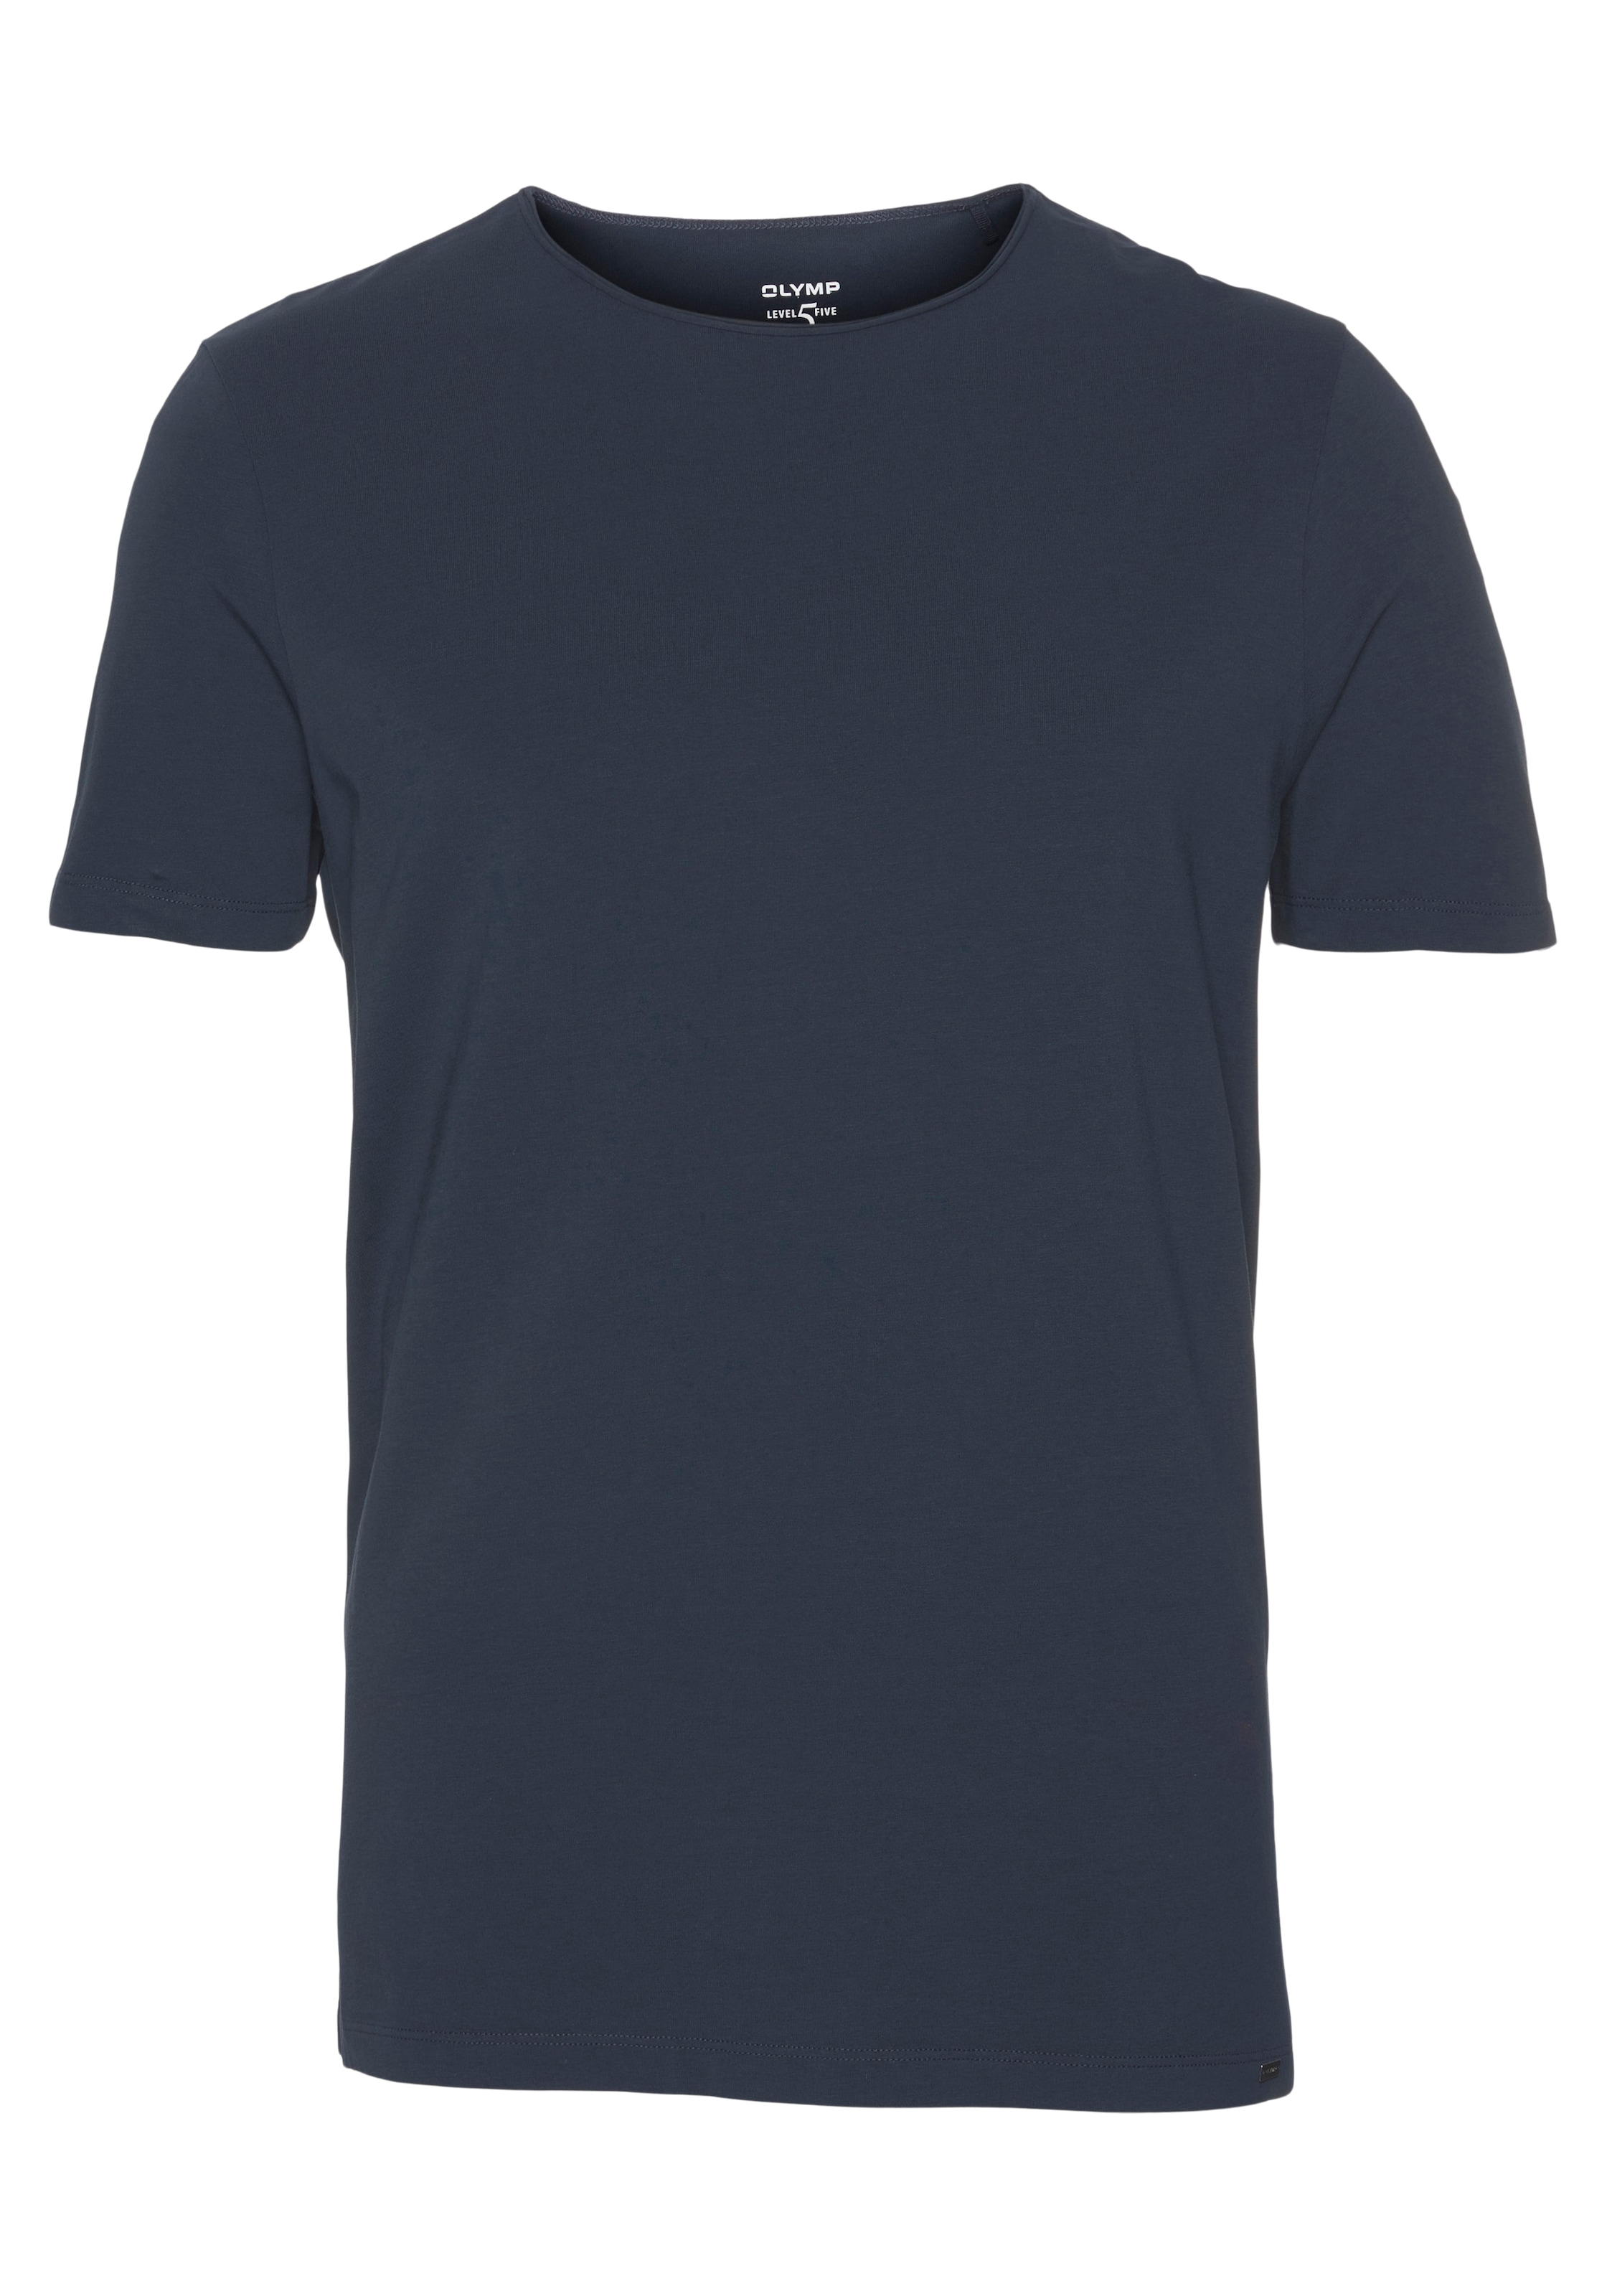 OLYMP T-Shirt »Level Five body fit«, feinem aus OTTO online bestellen bei Jersey